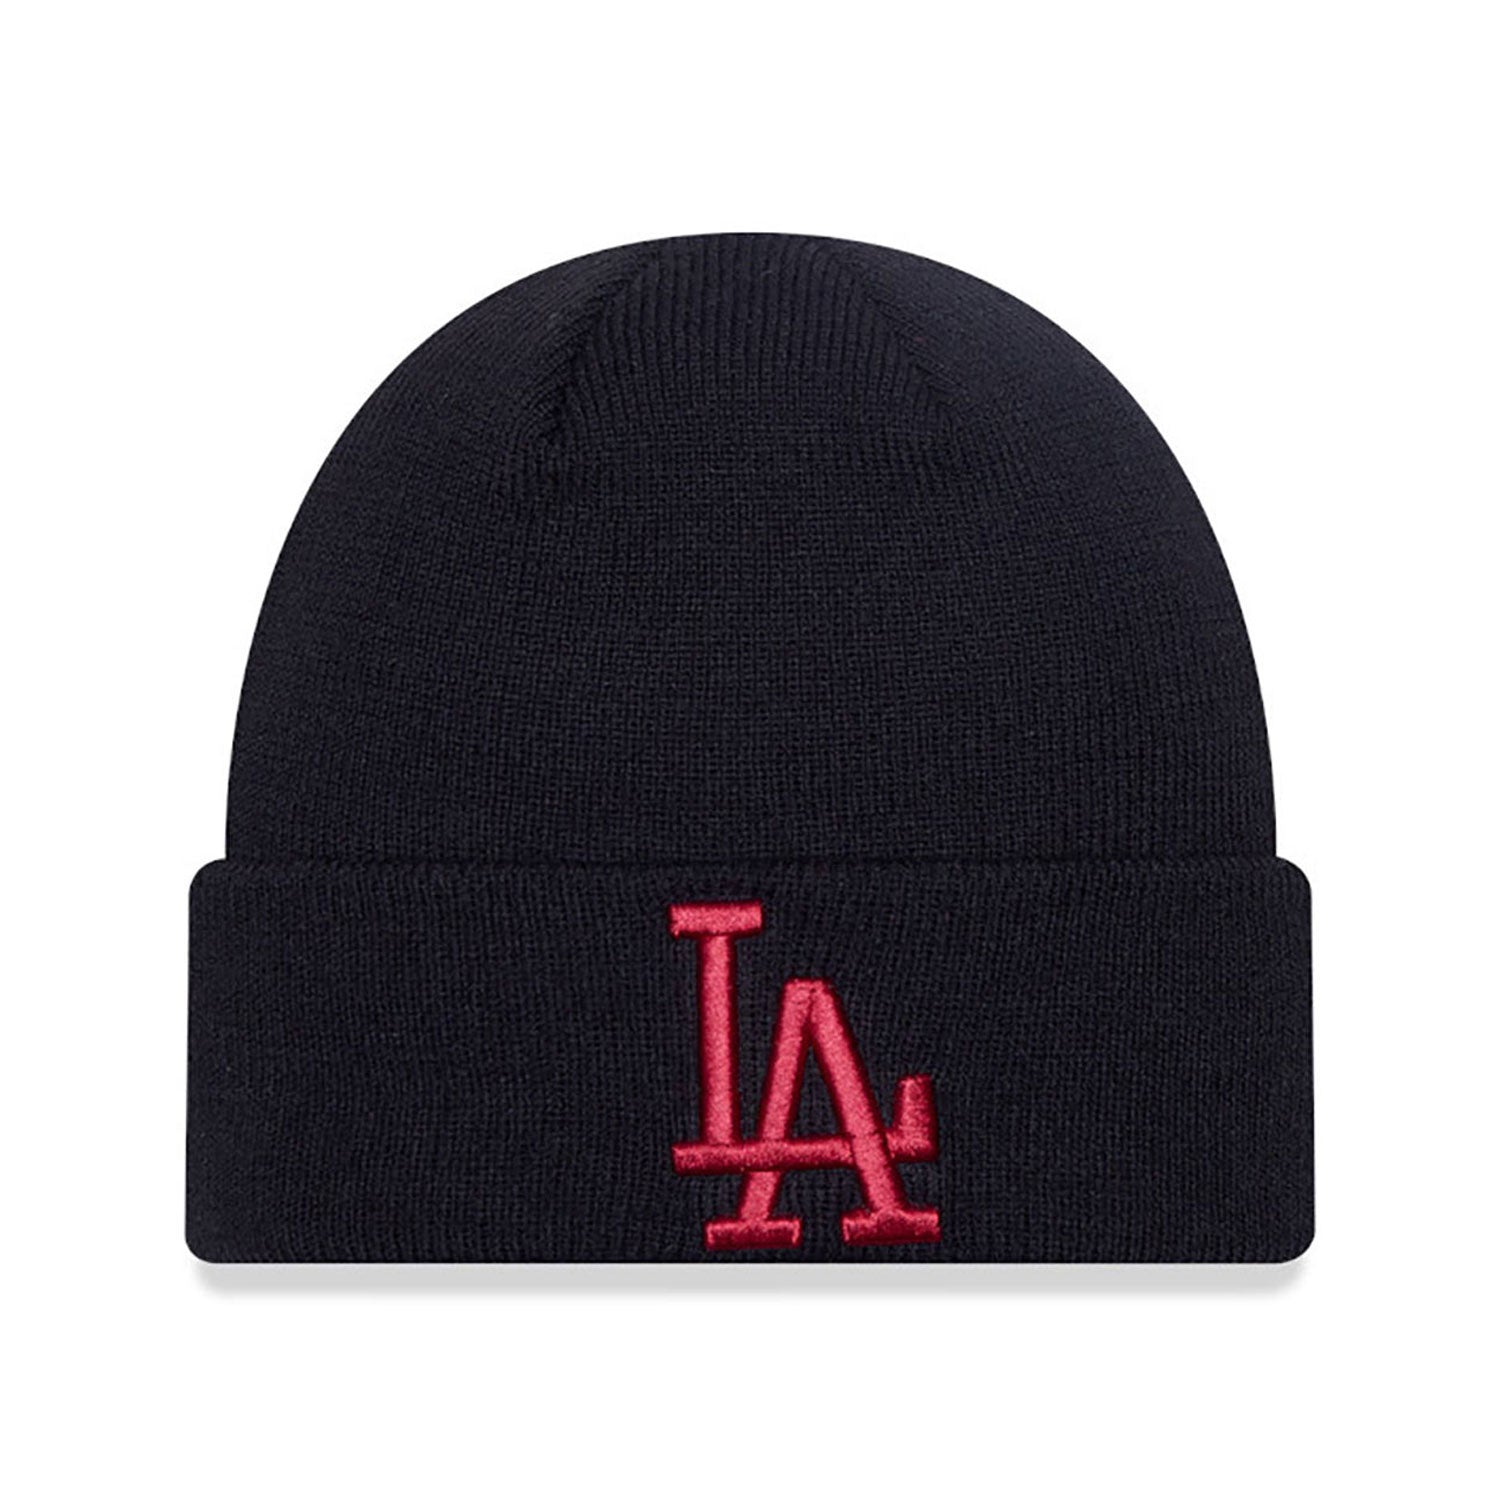 New Era bonnet kids LA Dodgers 